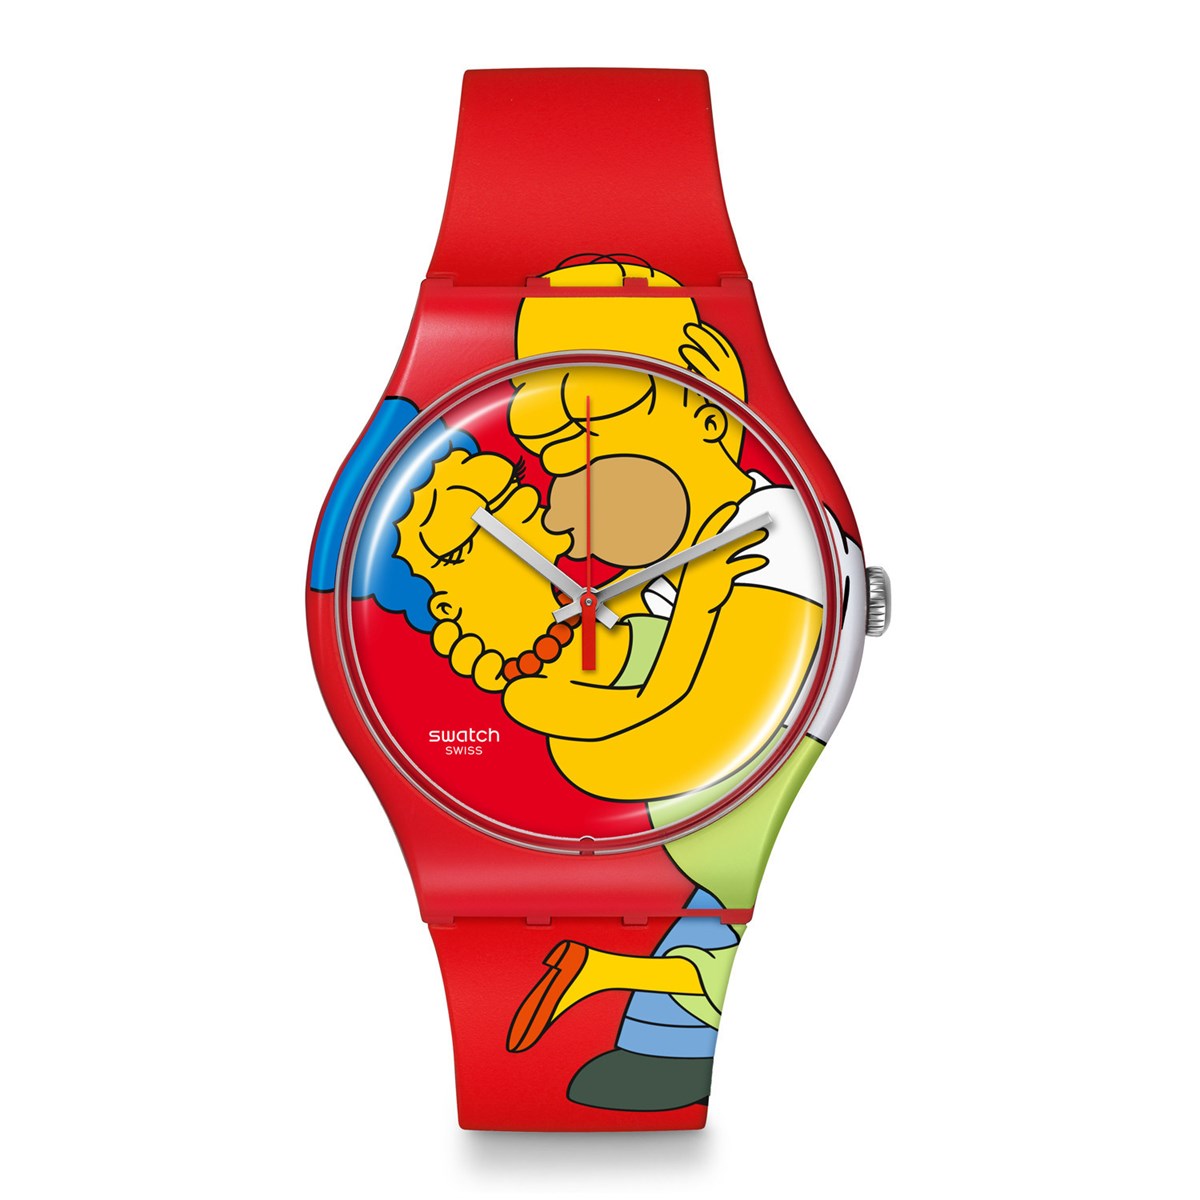 Montre Swatch collection The Simpsons Swett Embrace
Edition Saint Valentin - vue 3